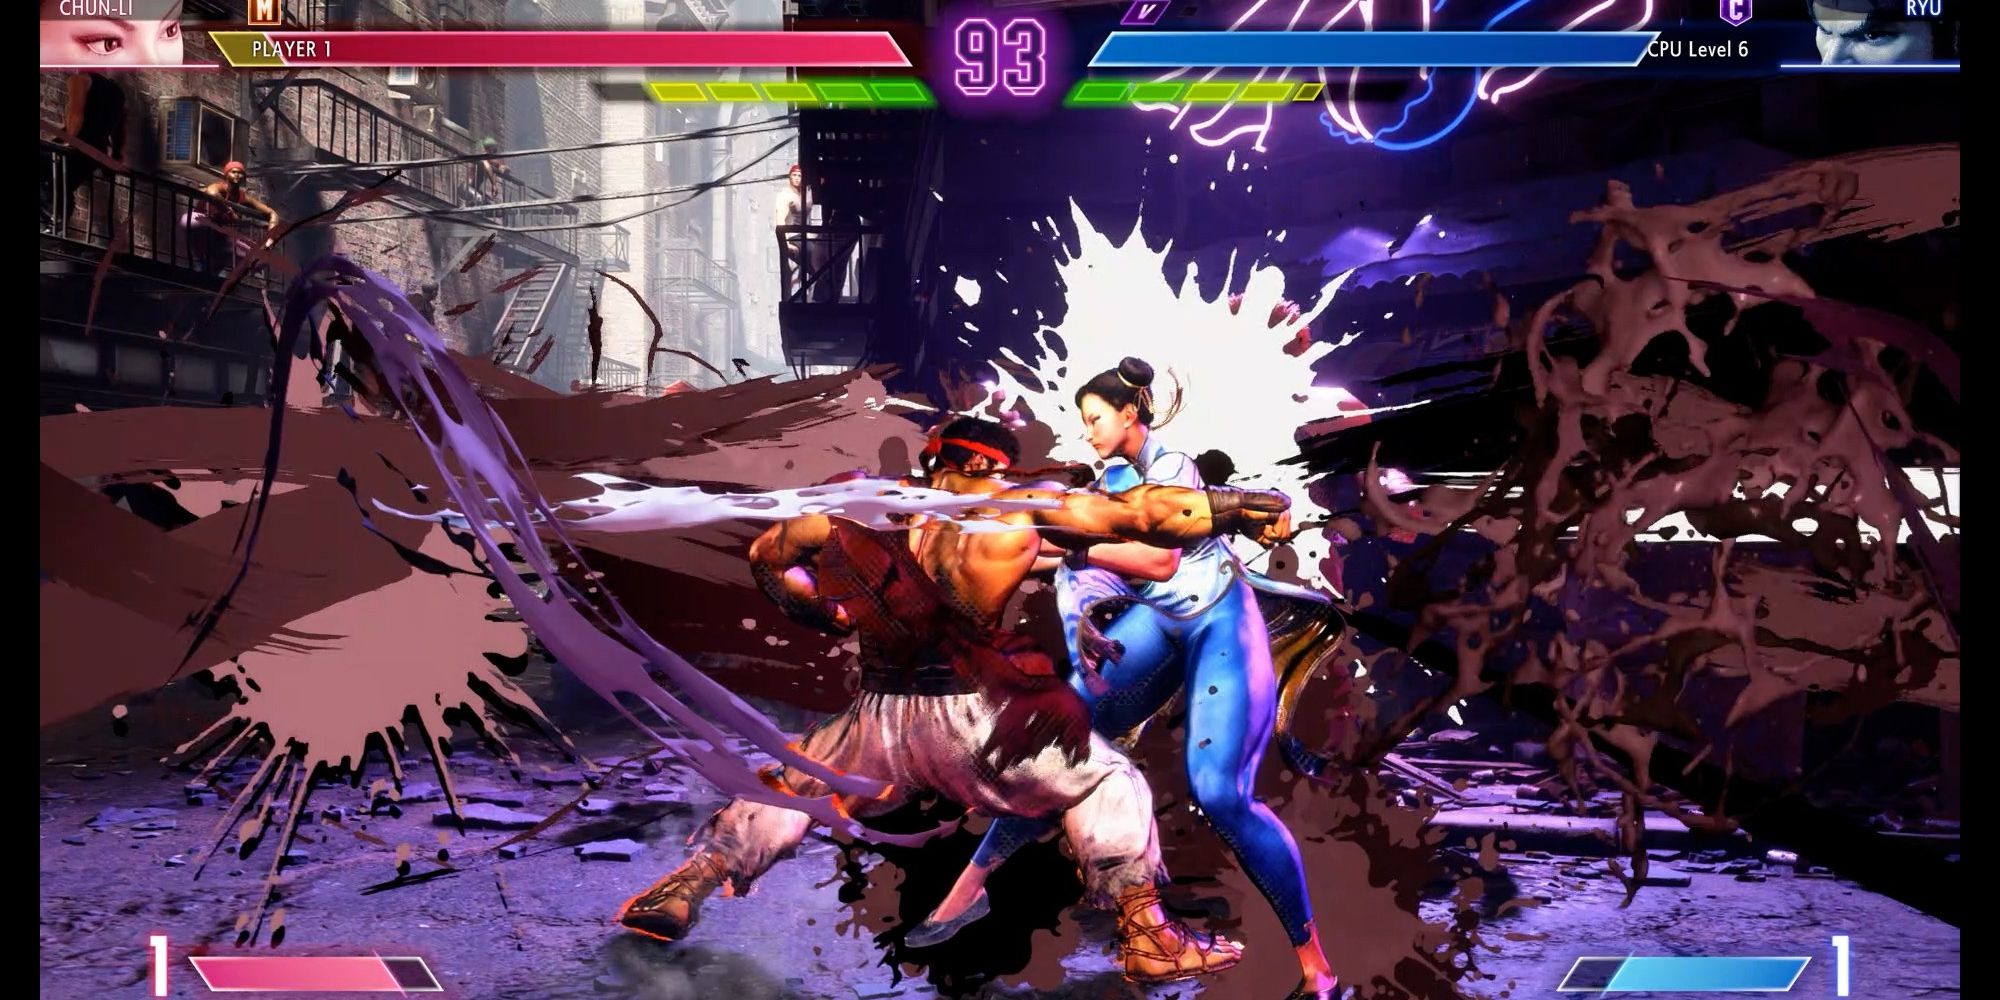 Chun-Li battles Ryu in Street Fighter 6